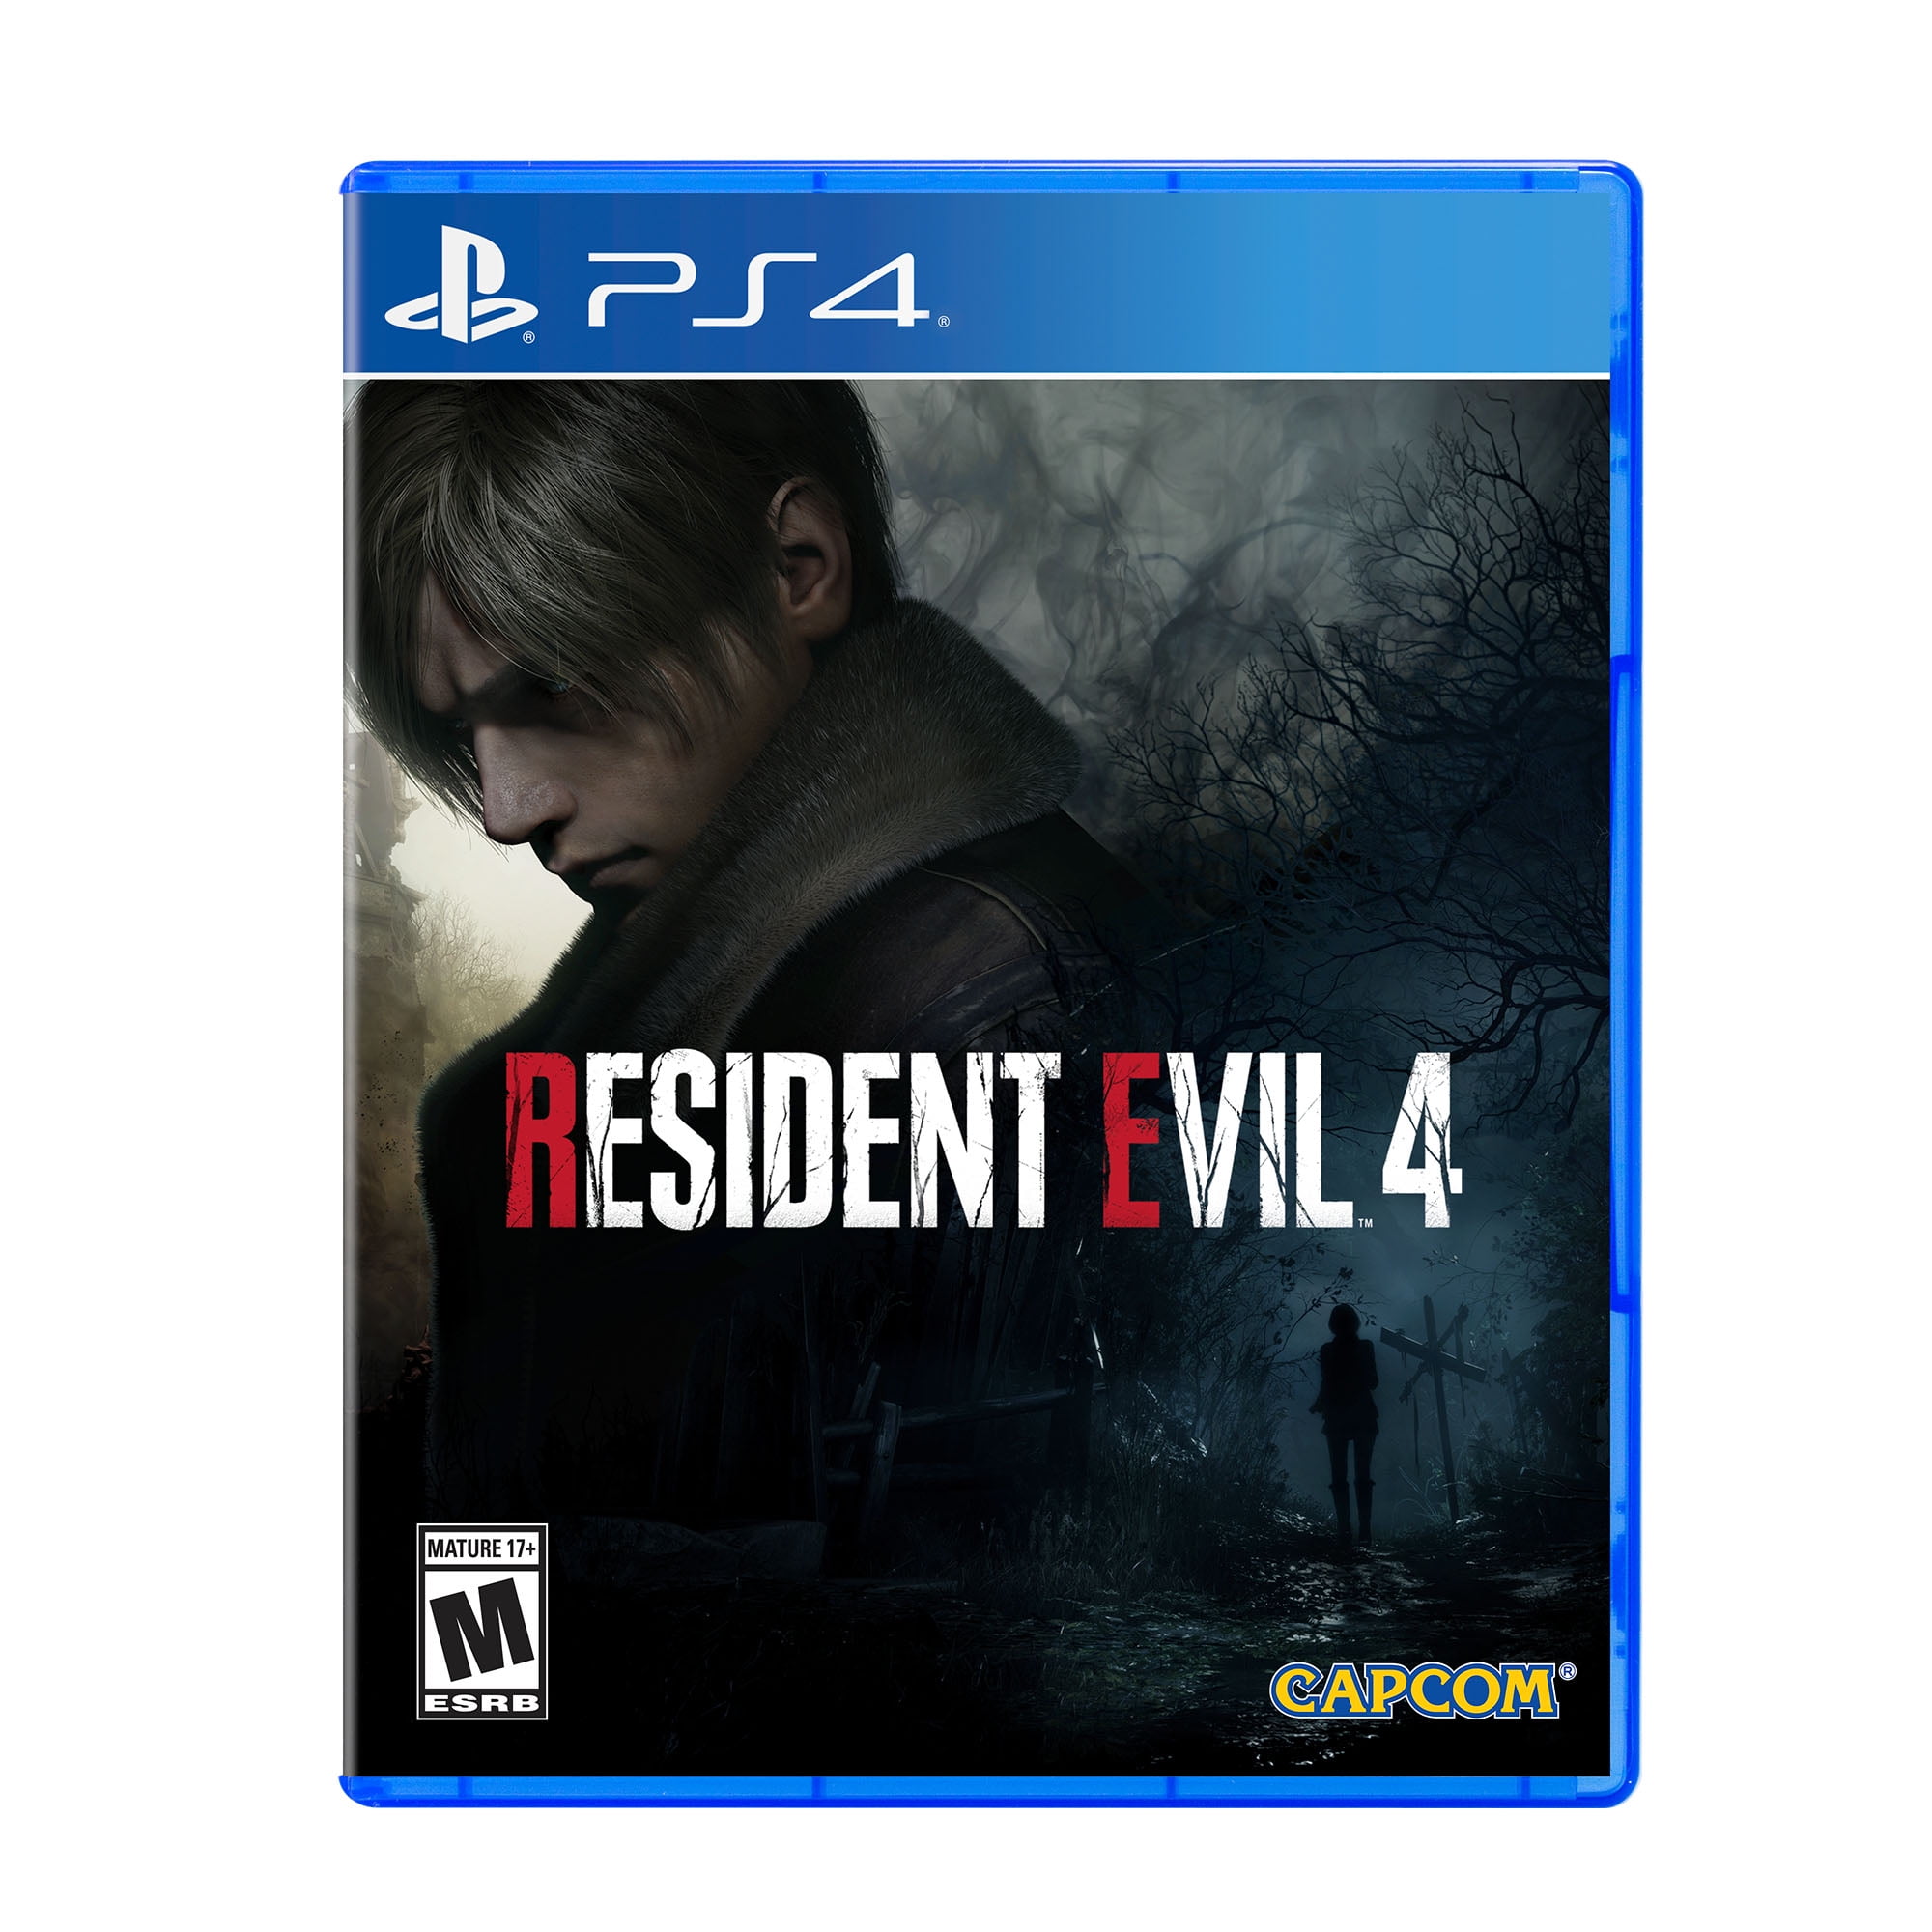 Buy cheap Resident Evil 4 cd key - lowest price